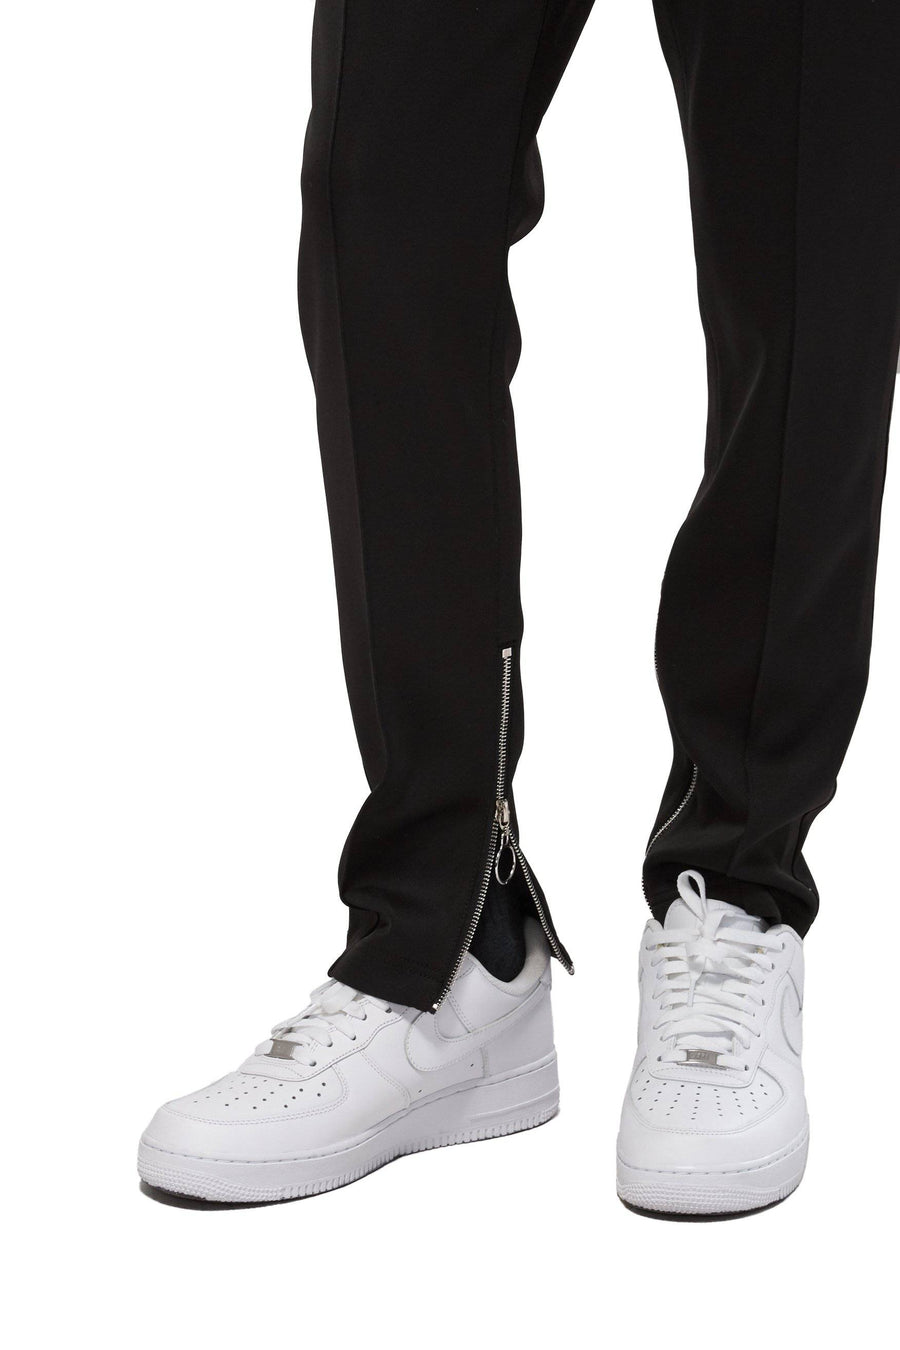 Konus Men's Track Pants With Knit Tape detail in Black - shopatkonus